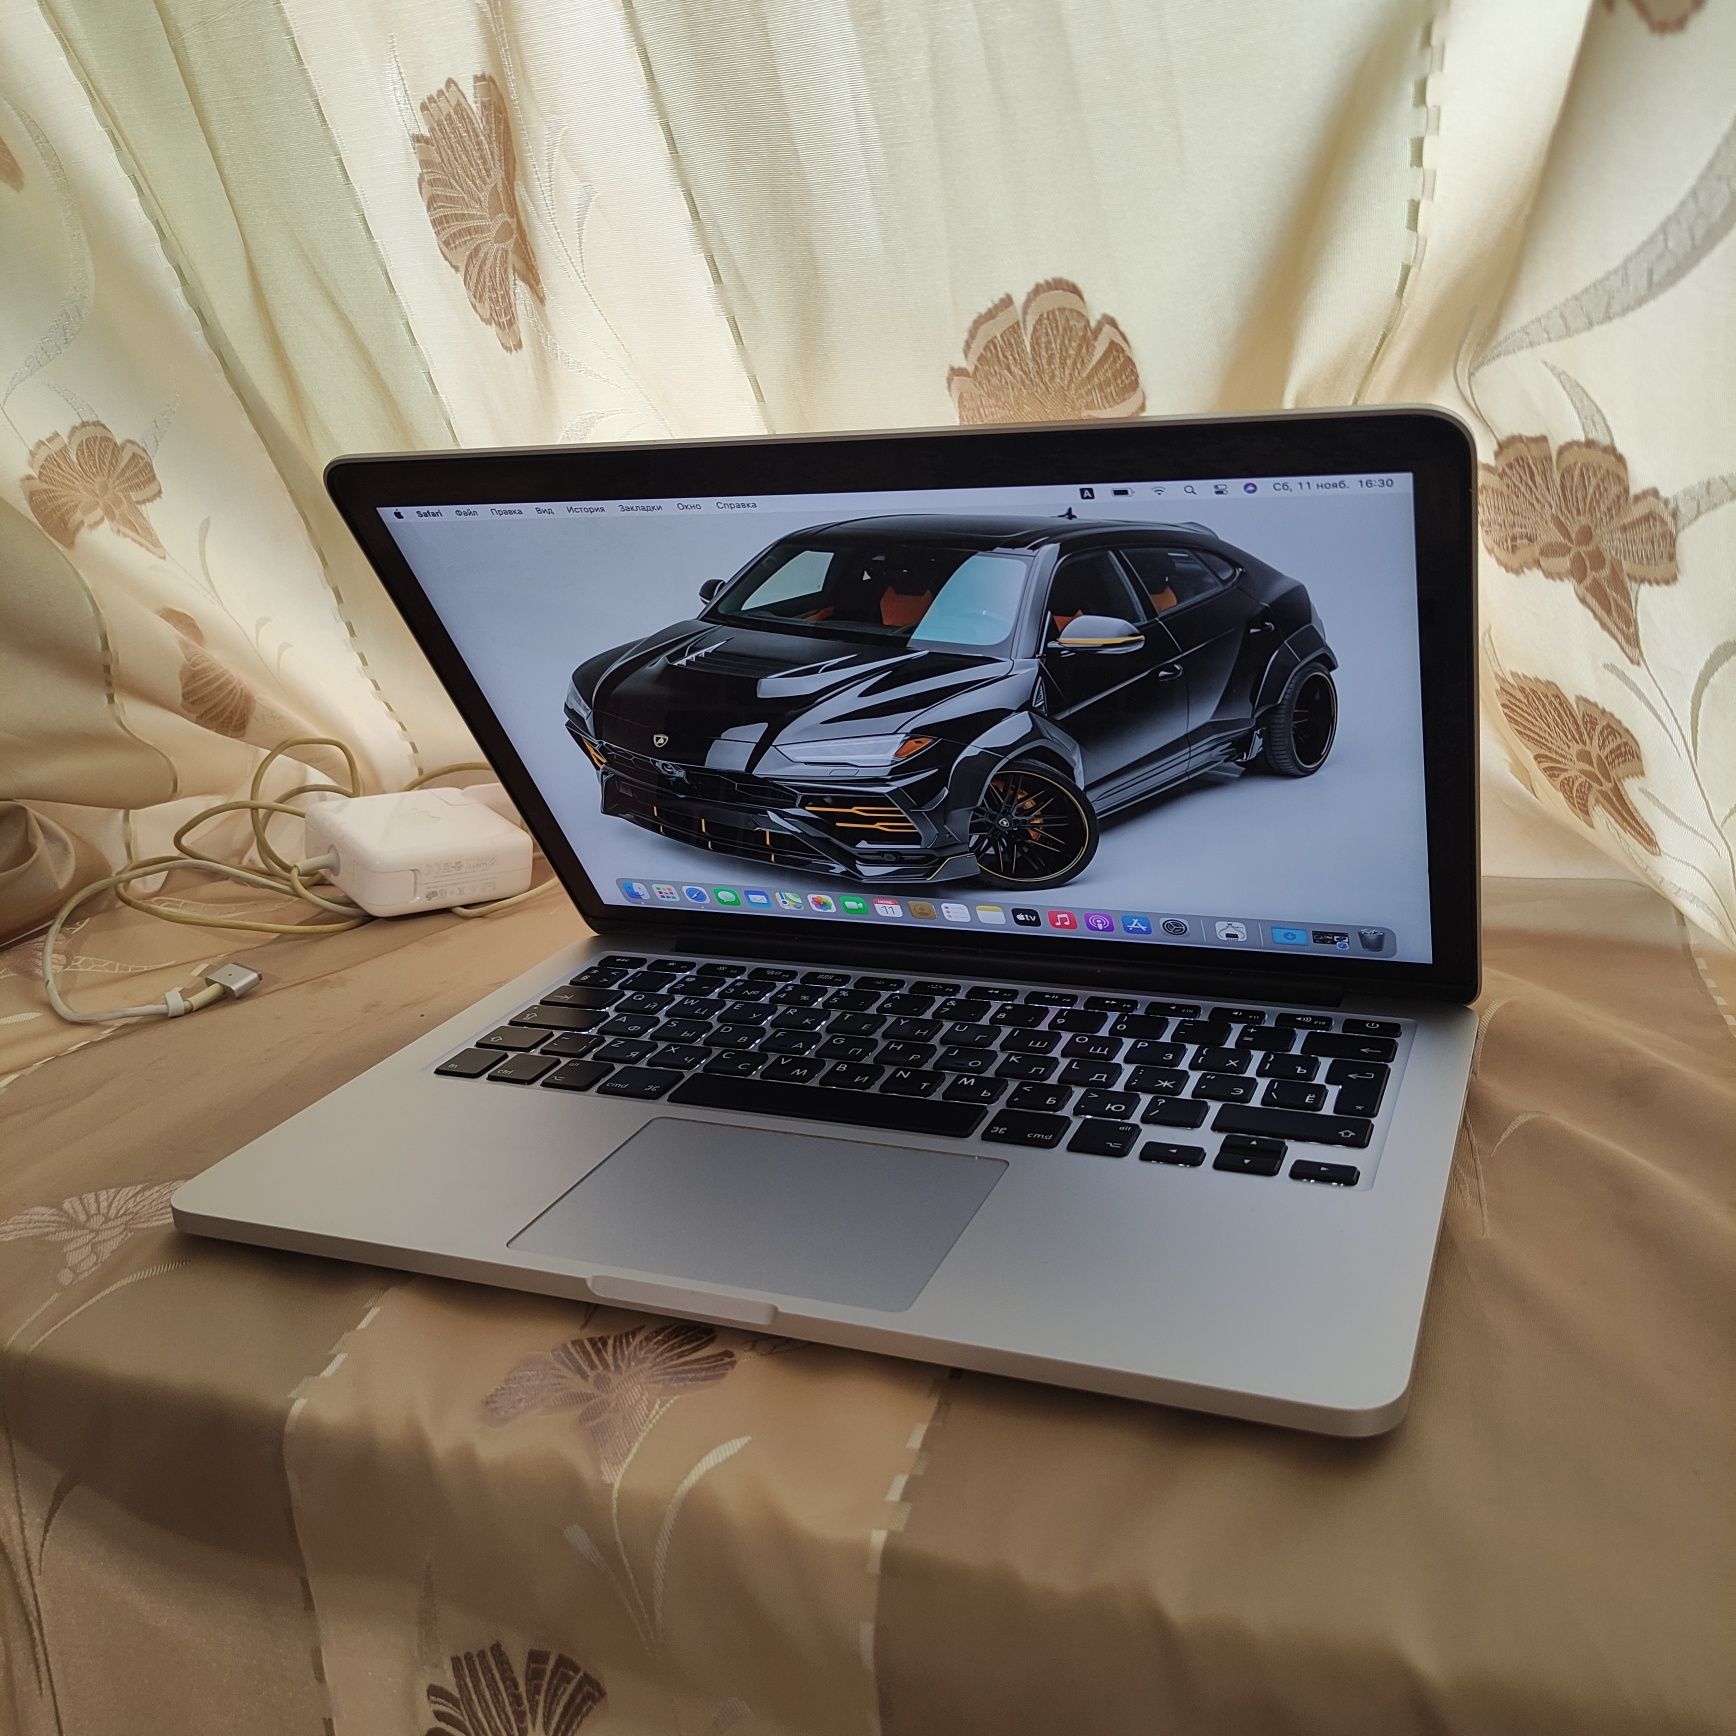 MacBook Pro 13 Retina/Core i7/ SSD-500GB/ОЗУ-16GB/Куплен 2015г/Мышка